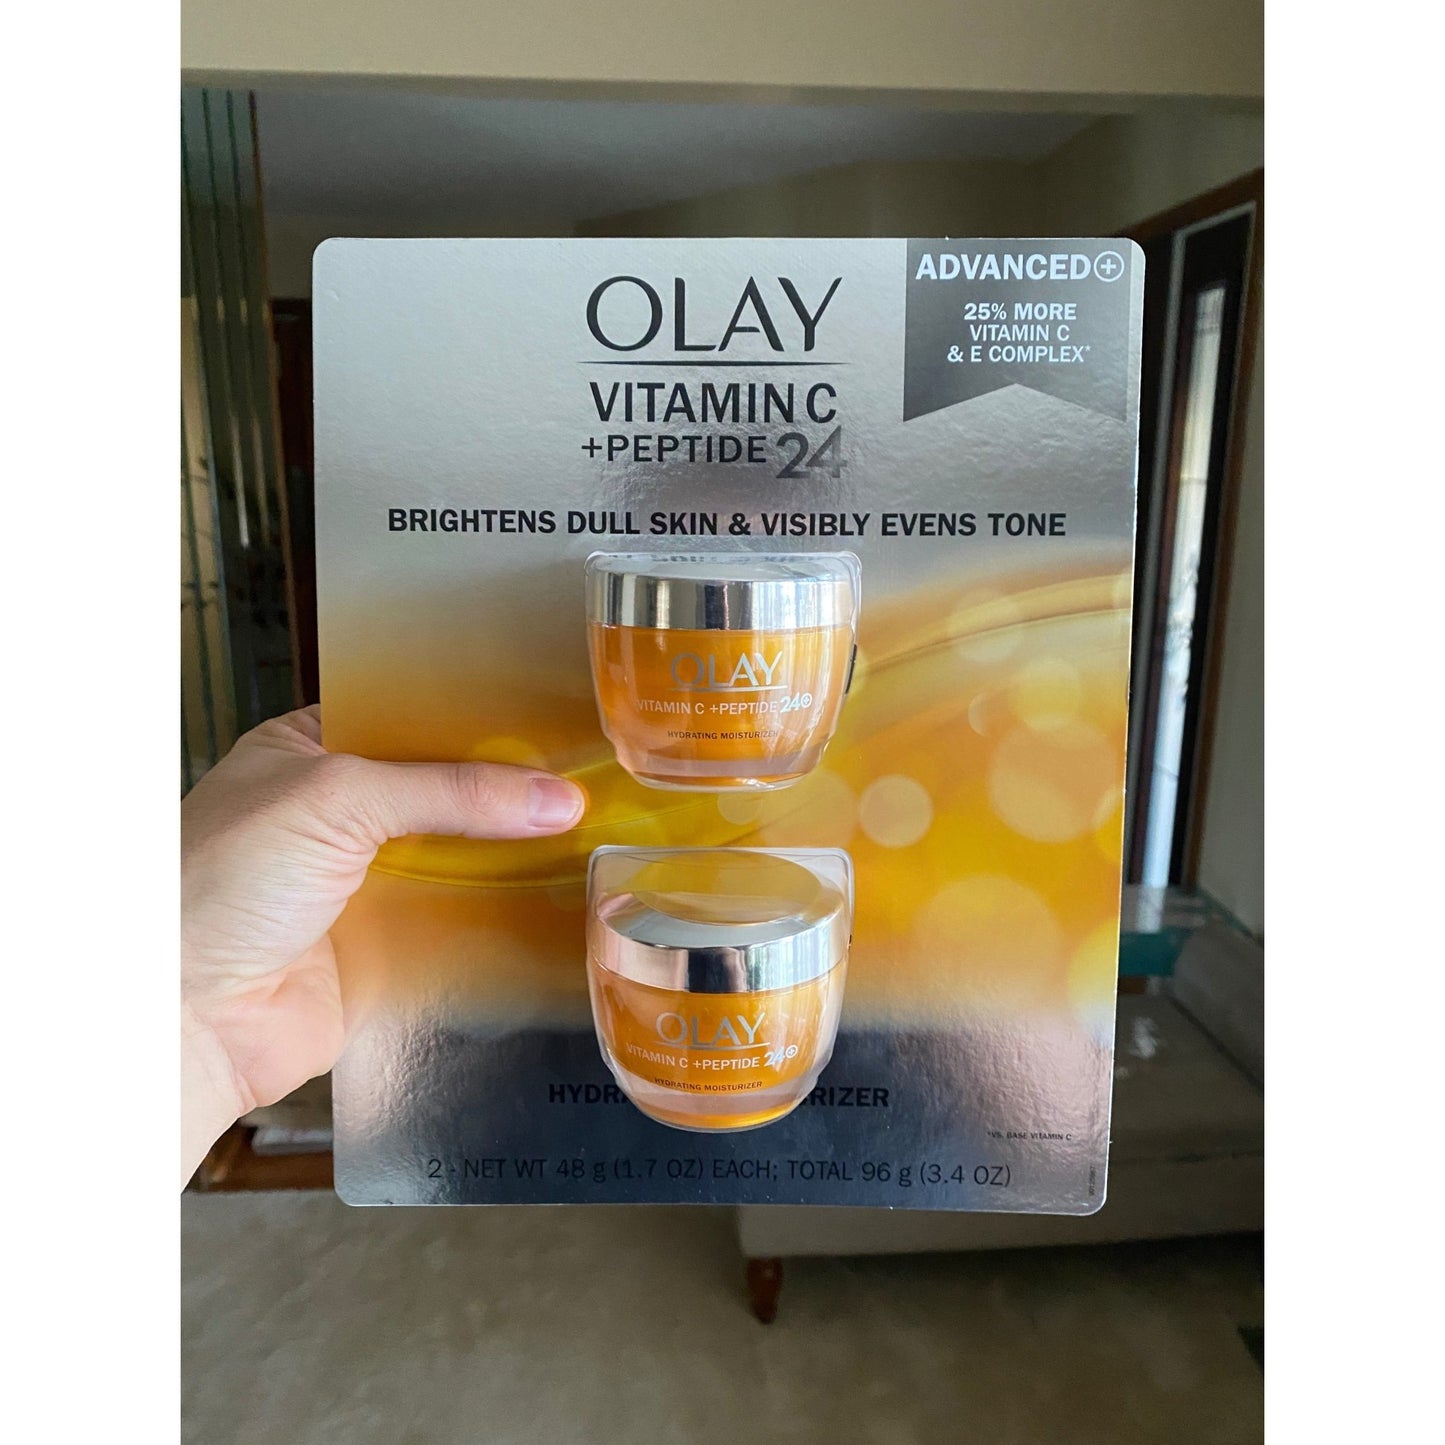 Olay Vitamin C & Peptide 24 Advanced Moisturizer, 48gx2 (Pack of 2)